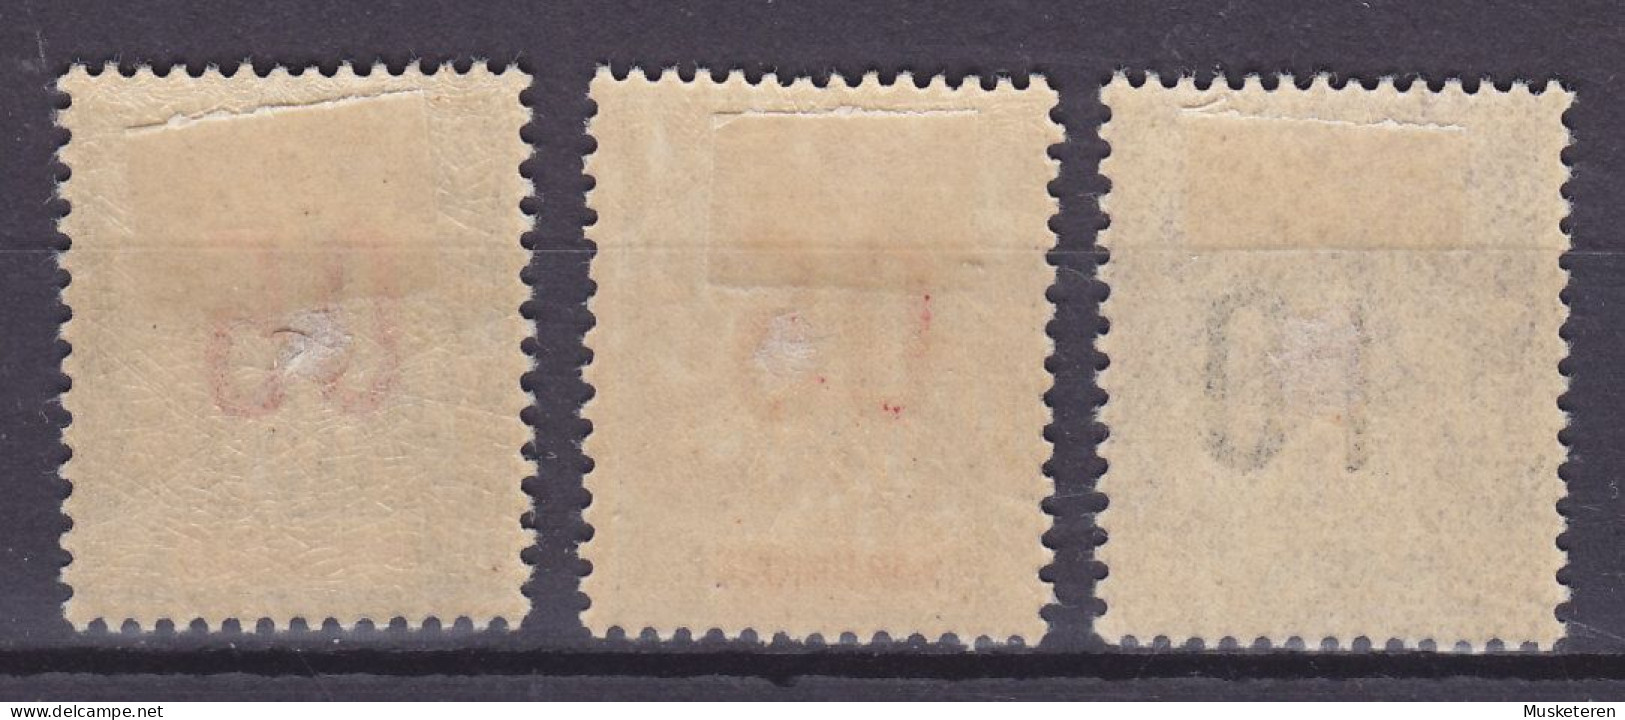 Martinique 1912 Mi. 73-74, 76 I, Kolonialallegorie Overprinted Aufdruck Surchargé, MH* - Nuevos